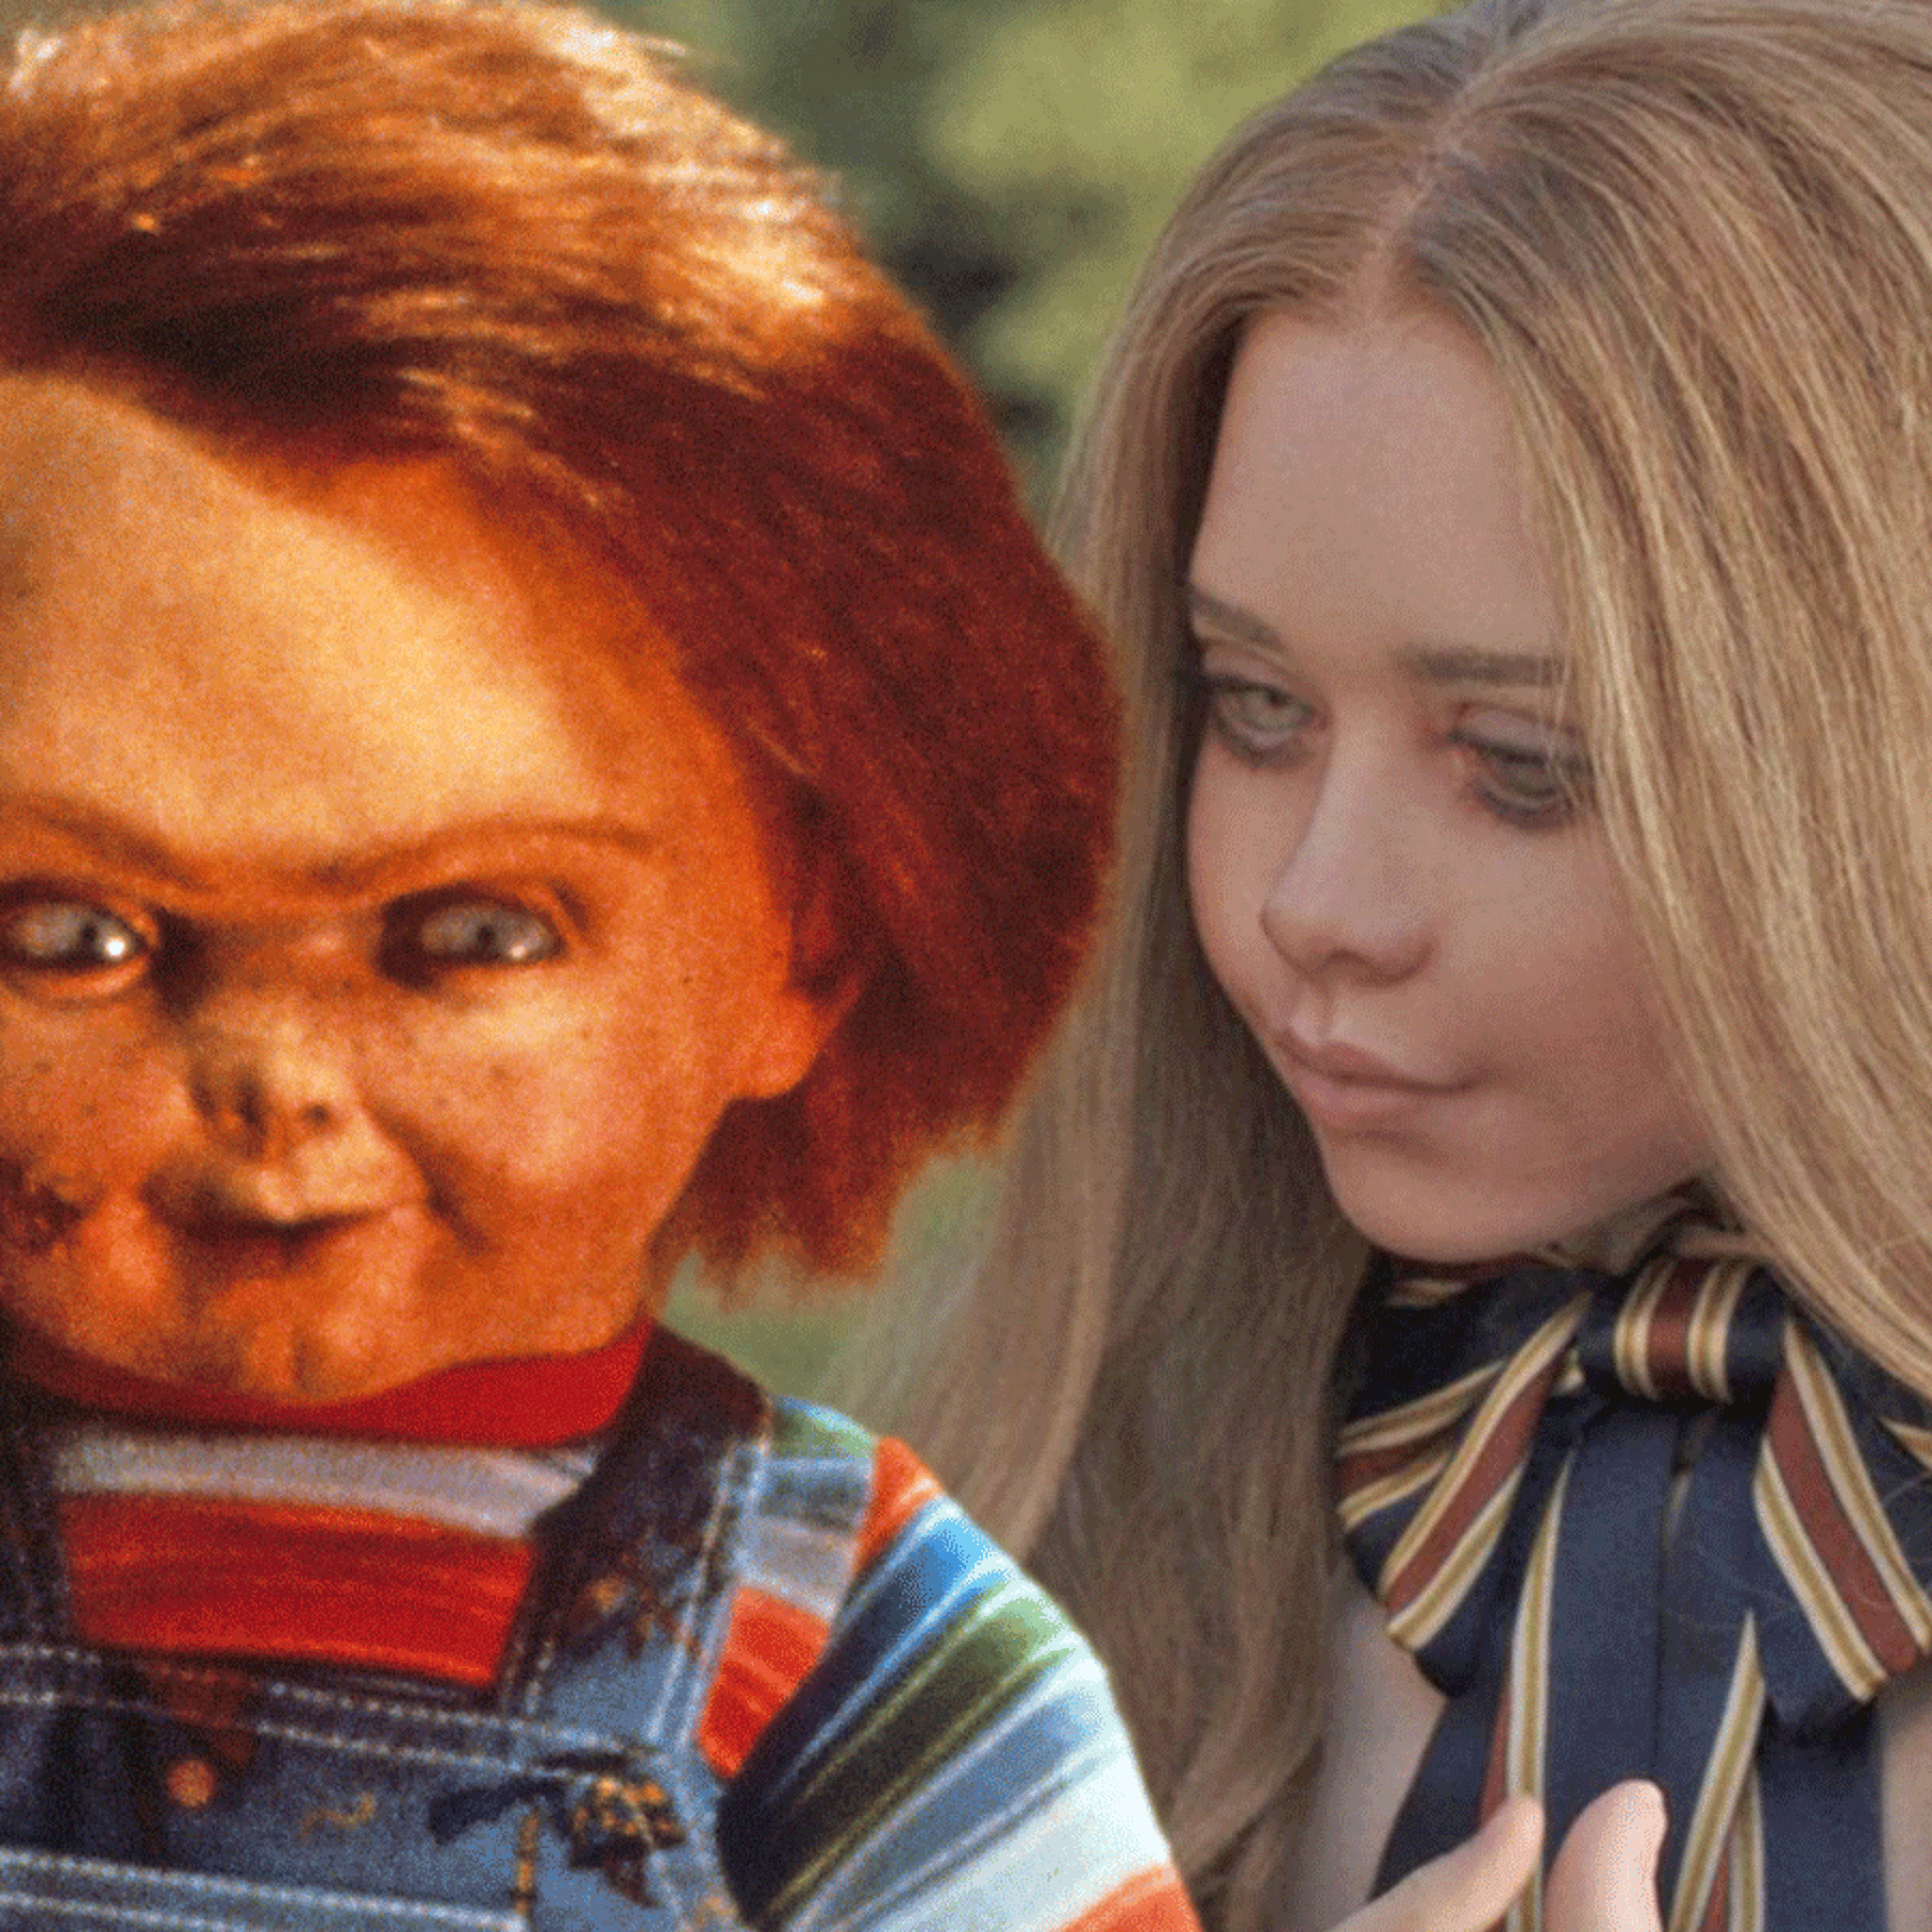 M3GAN' Becoming Internet's New Favorite Killer Doll Over Chucky